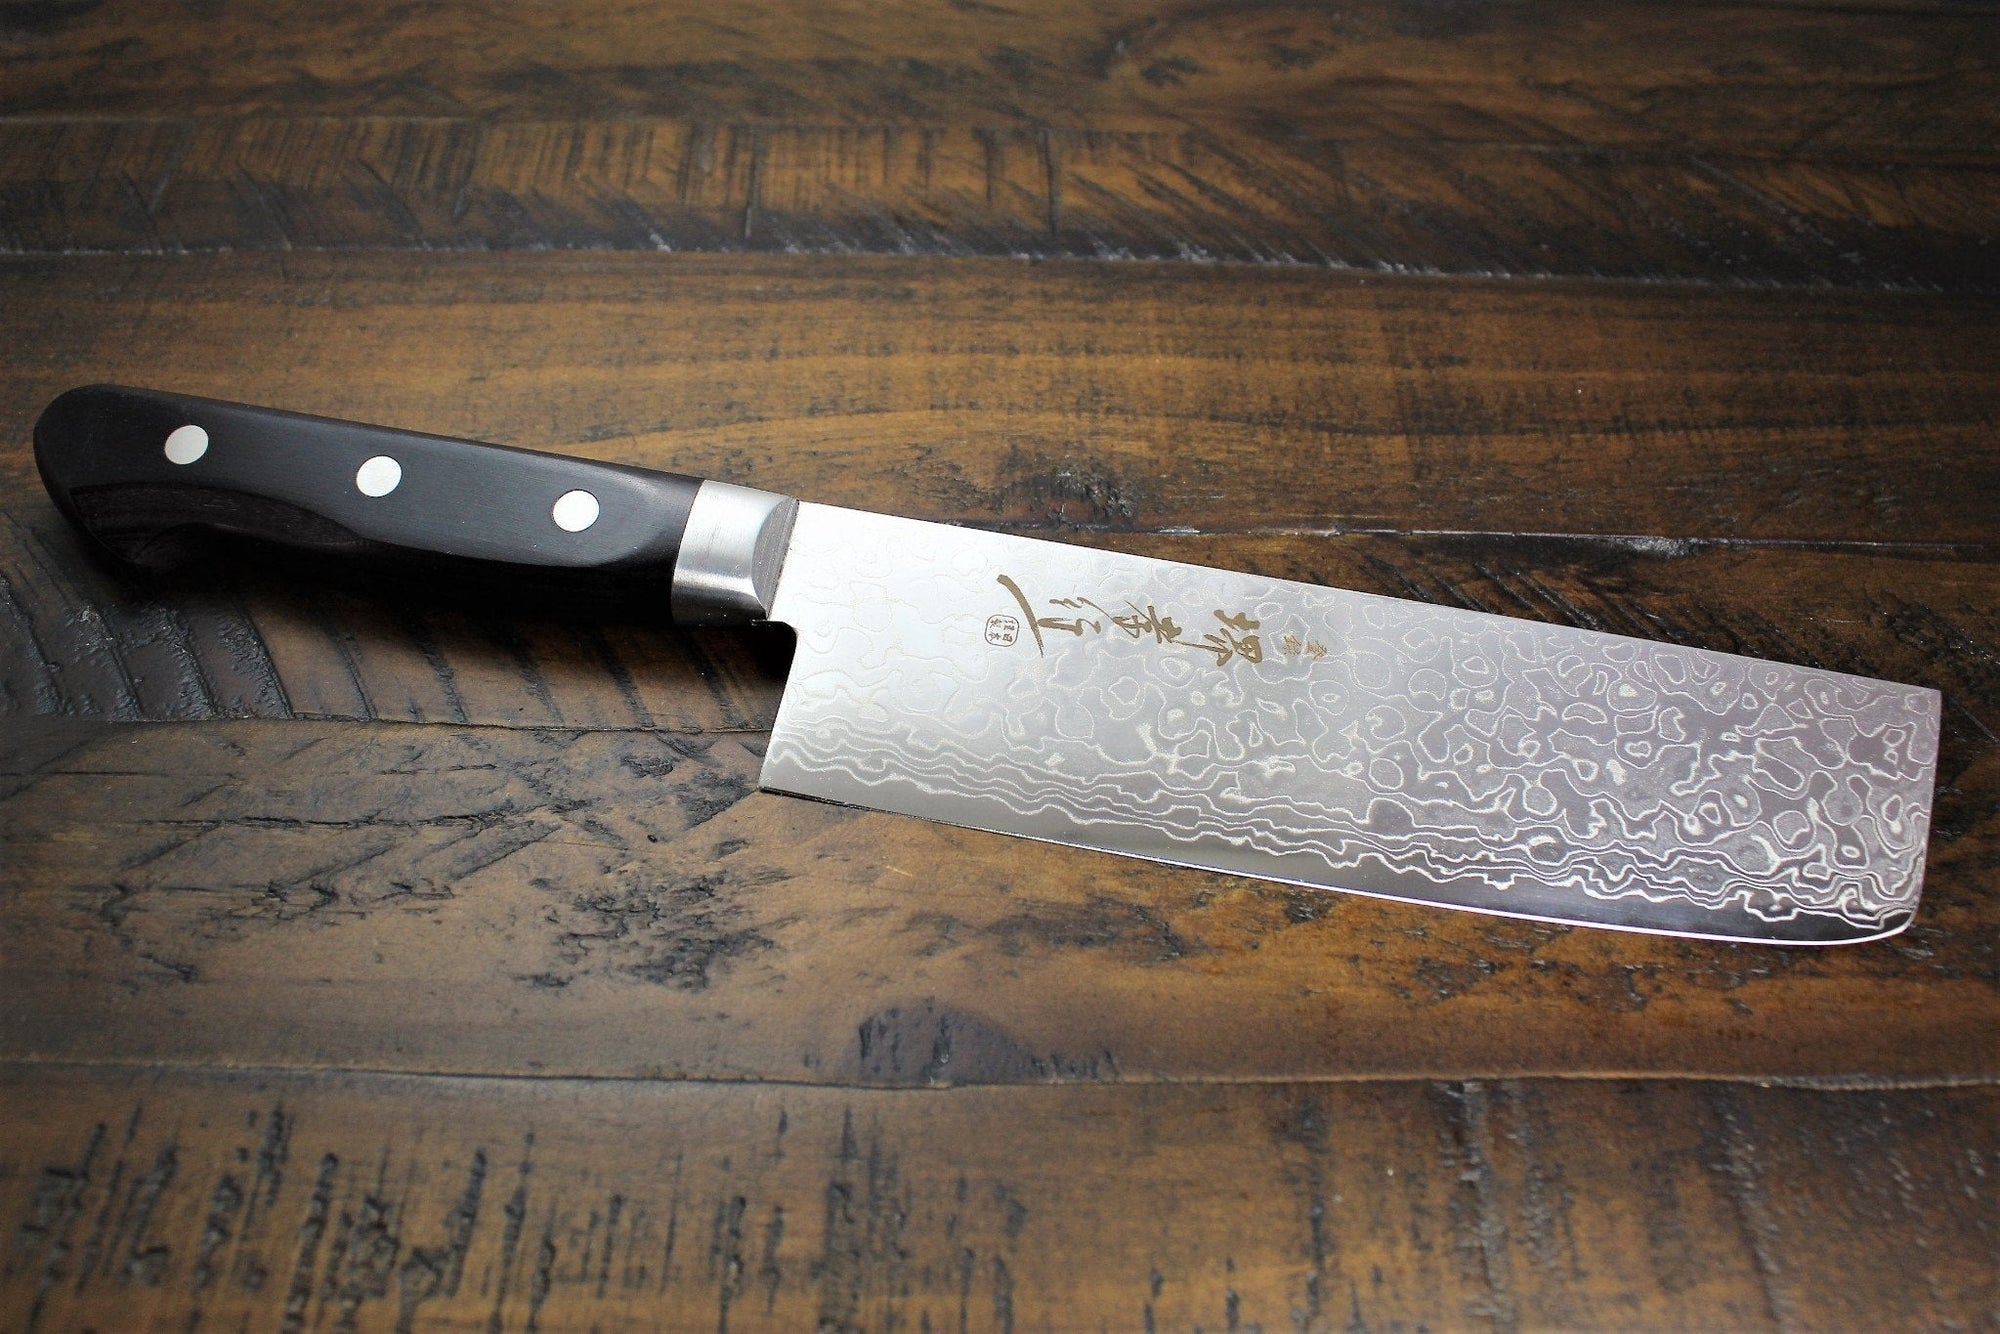 Pro Grade Japanese Stainless Steel Blade Vegetable Slicer Mandoline -  Hasu-Seizo